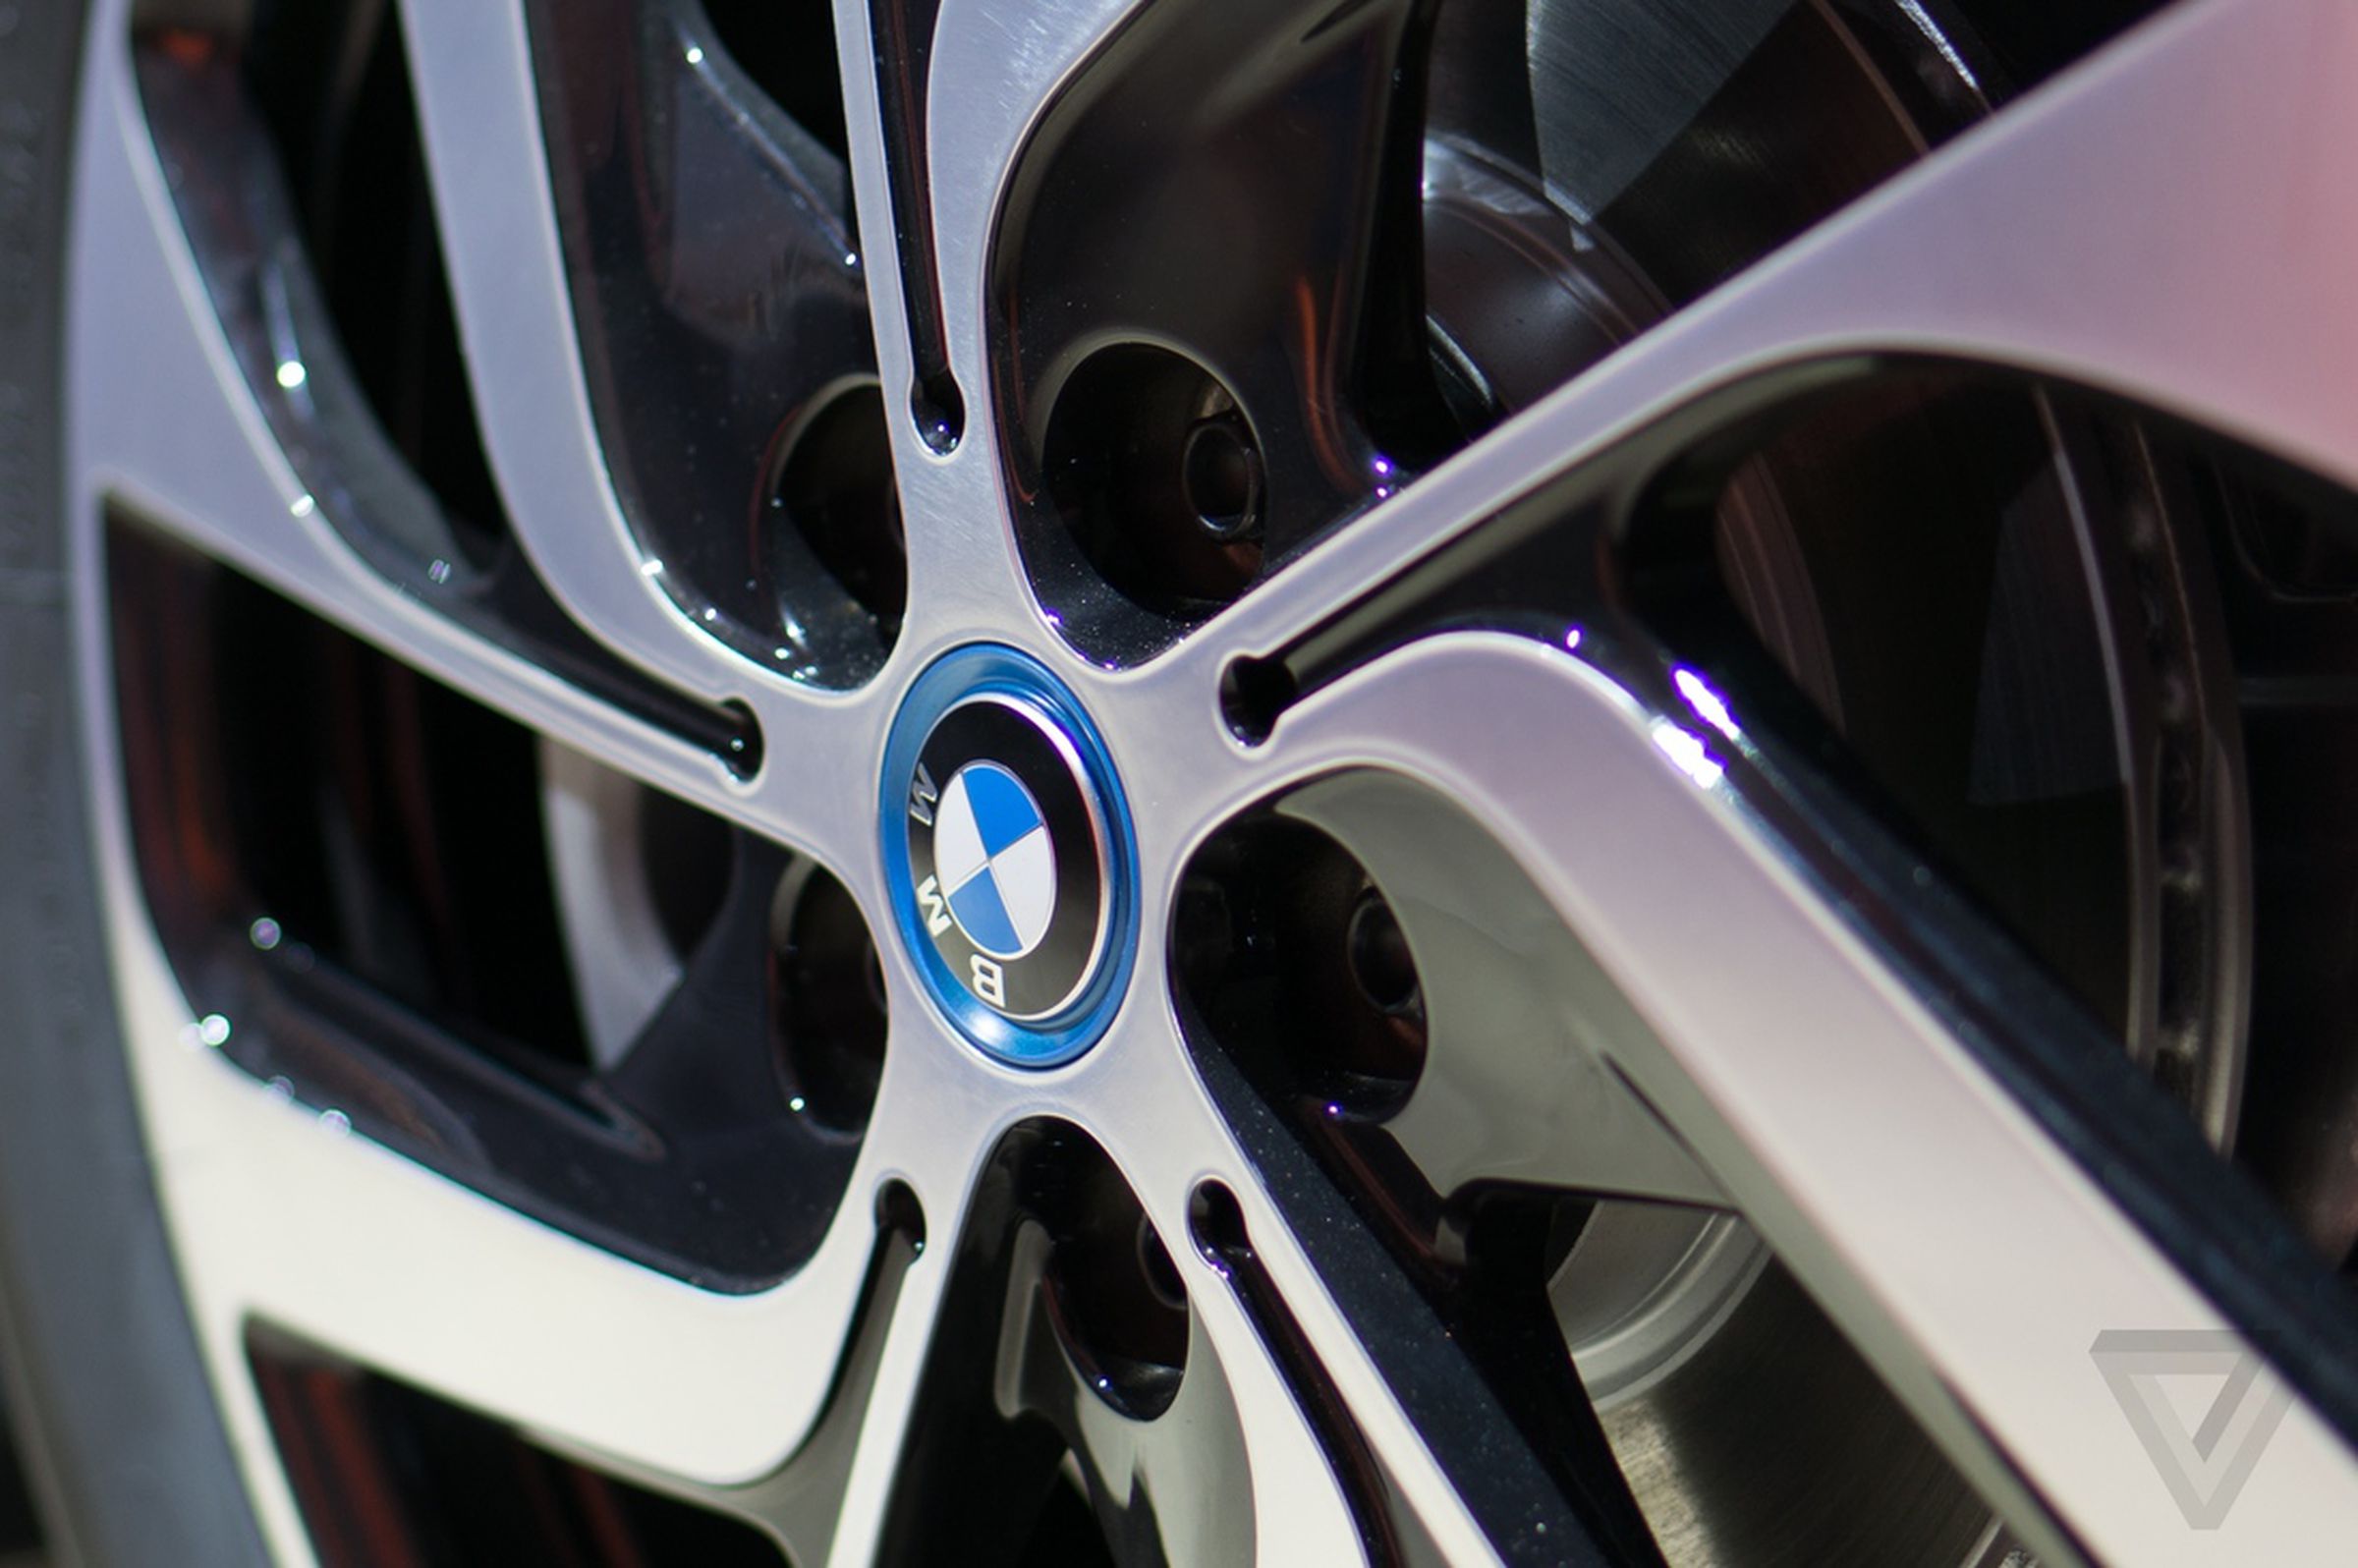 BMW i3 electric vehicle production model photos